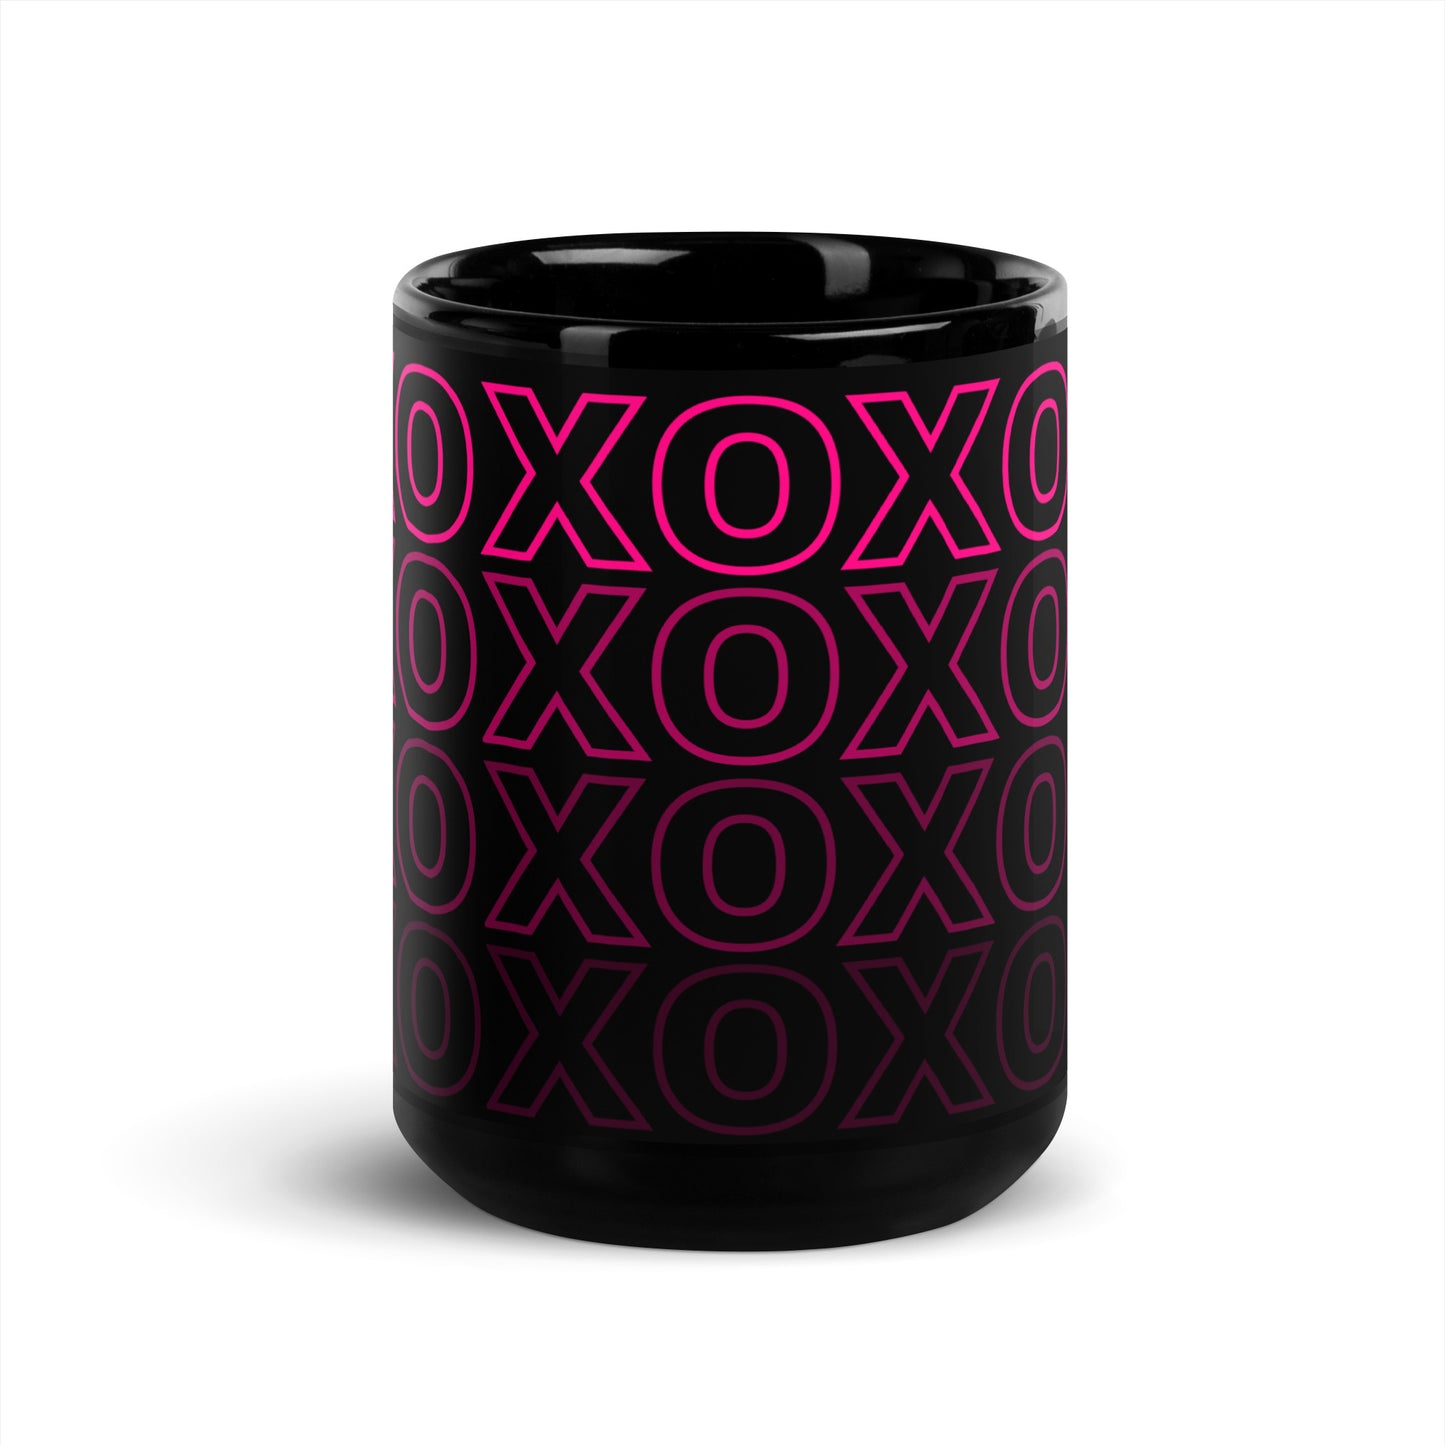 XOXO Black Glossy Mug